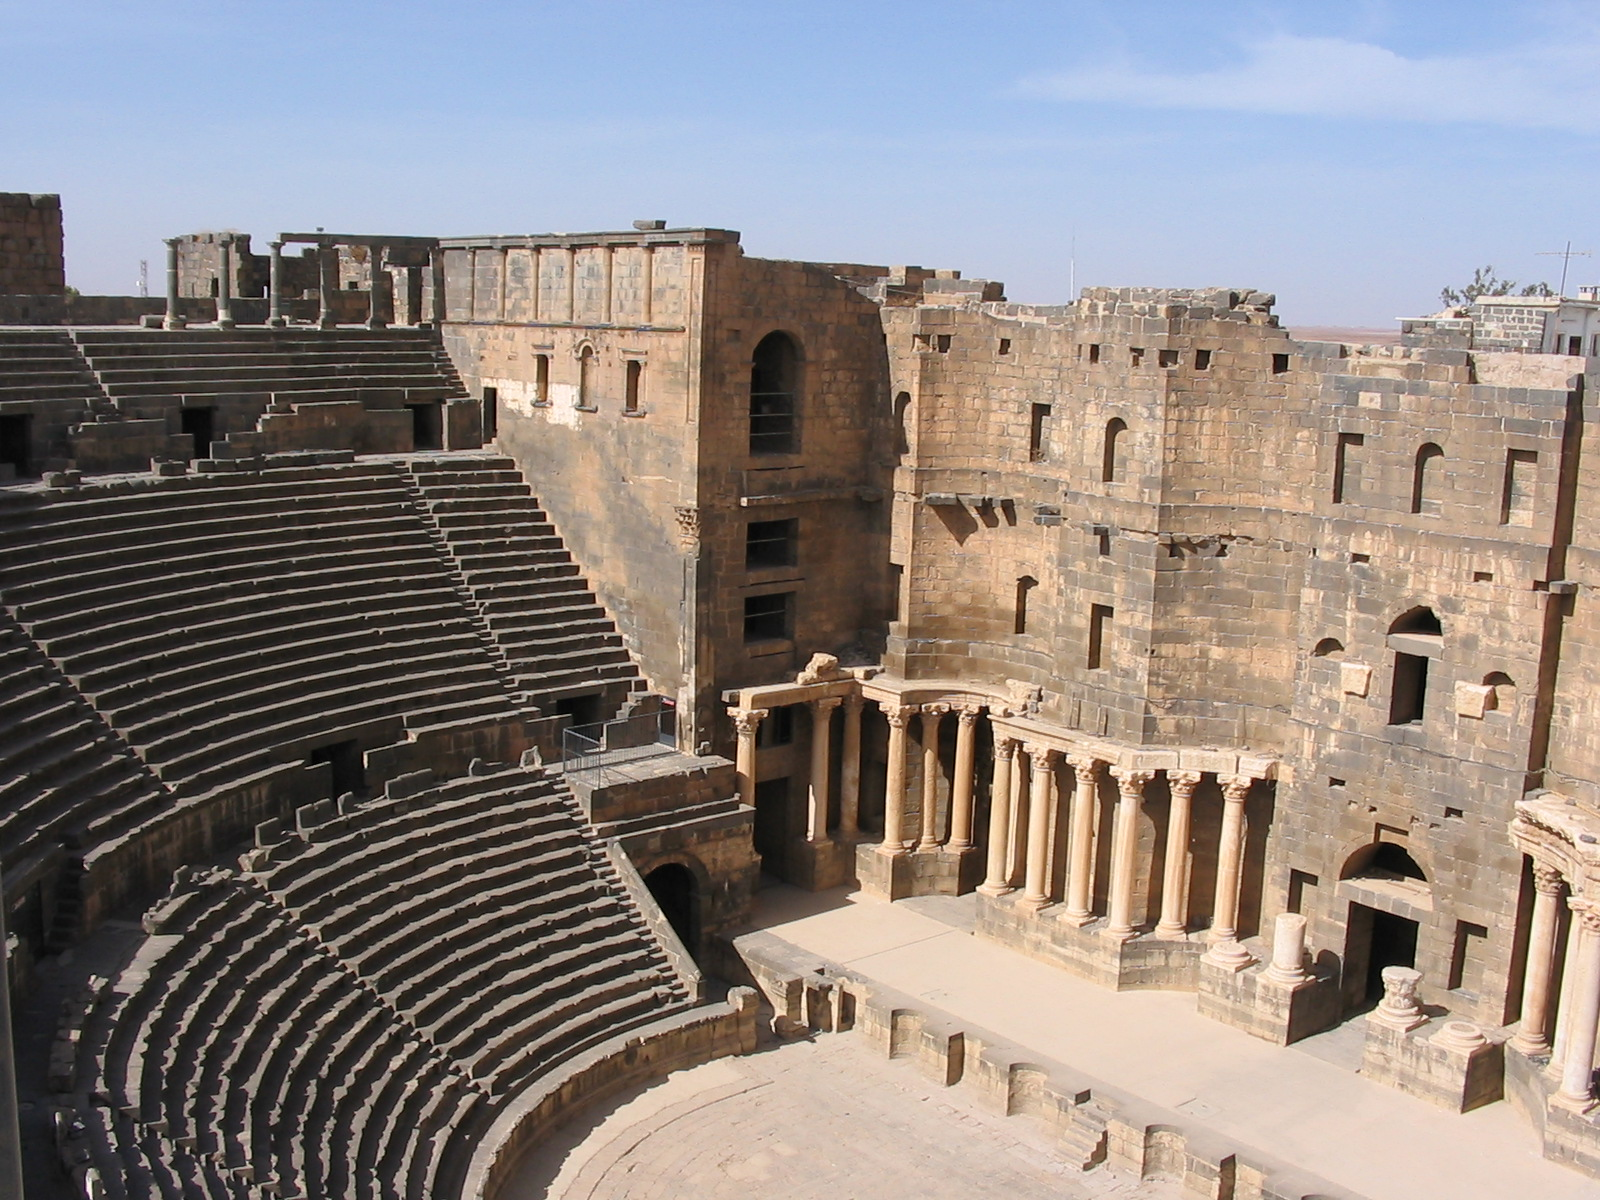 Roman Theatre at Bosra with Black Basalt seats